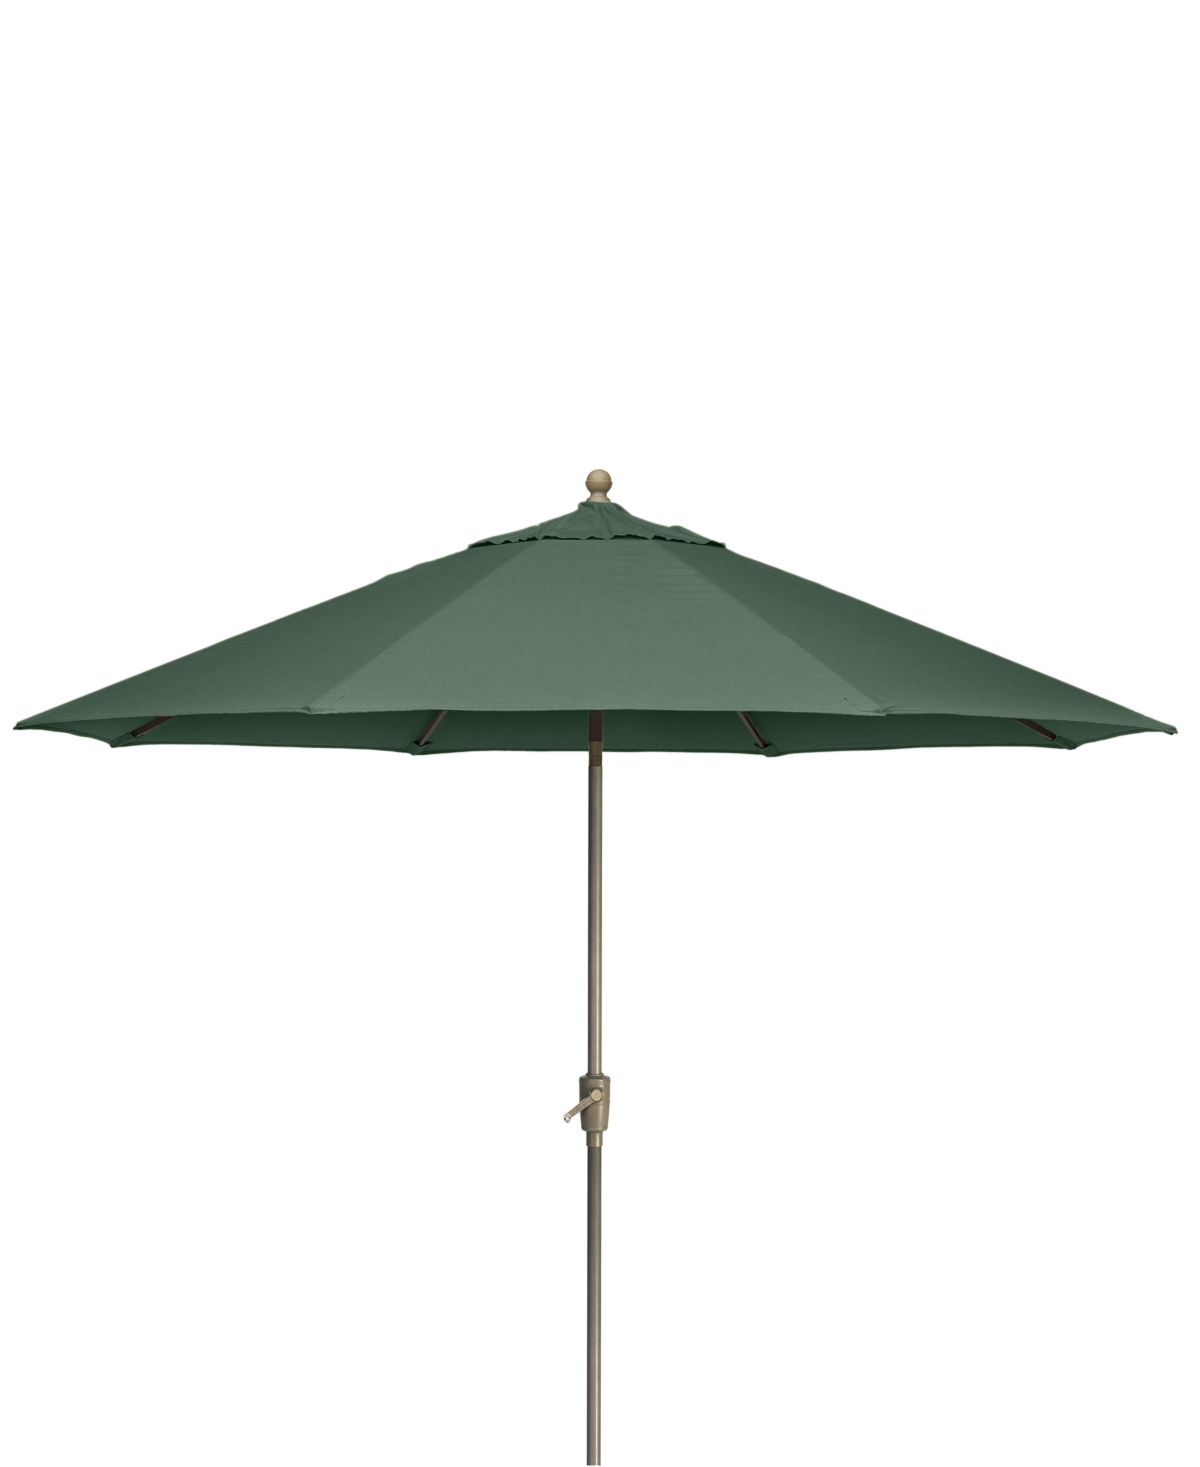 Agio Wayland Outdoor 11' Umbrella, Created For Macy's In Outdura Grasshopper